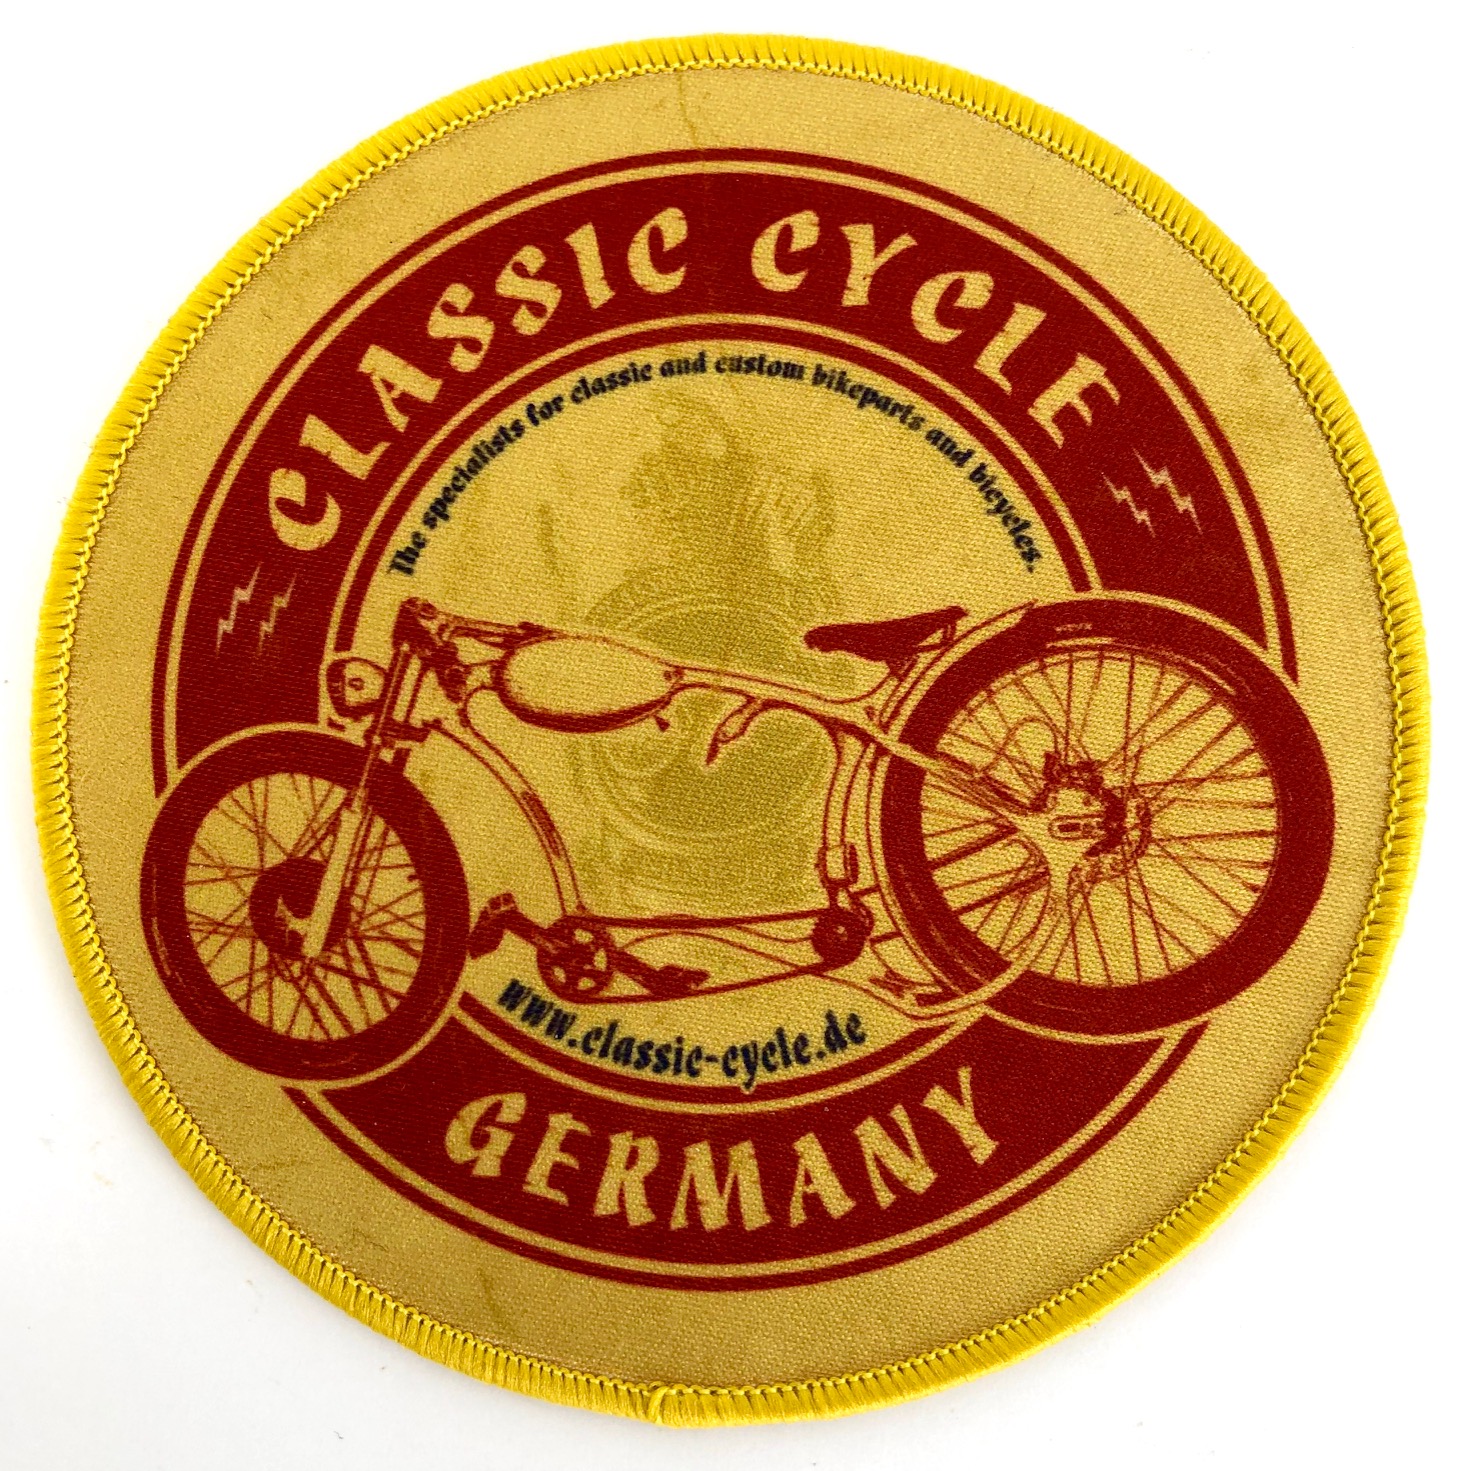 Toppa Classic Cycle originale Bobber Gold